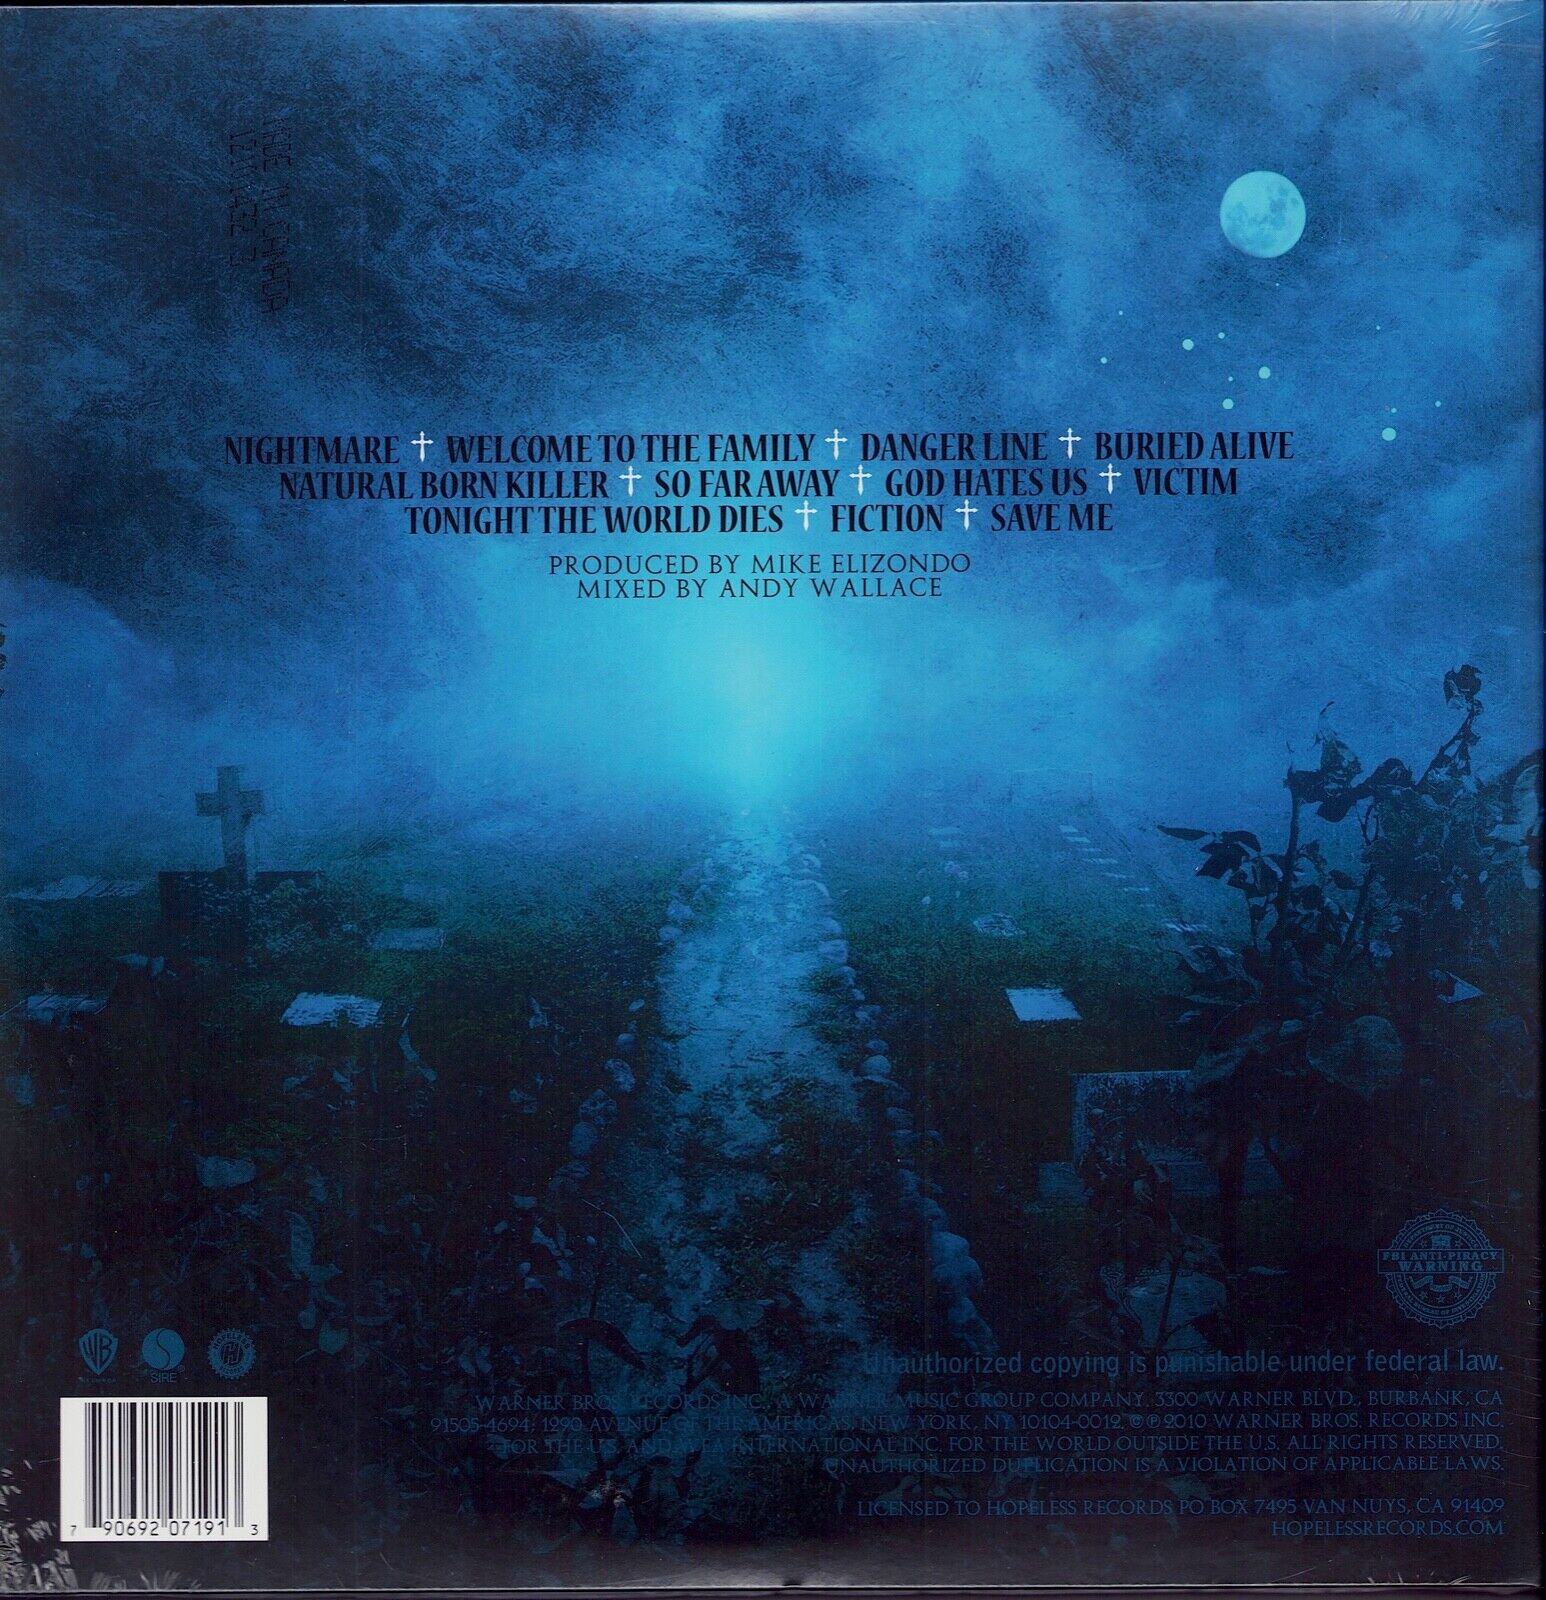 Avenged Sevenfold ‎– Nightmare Translucent Blue Vinyl 2LP